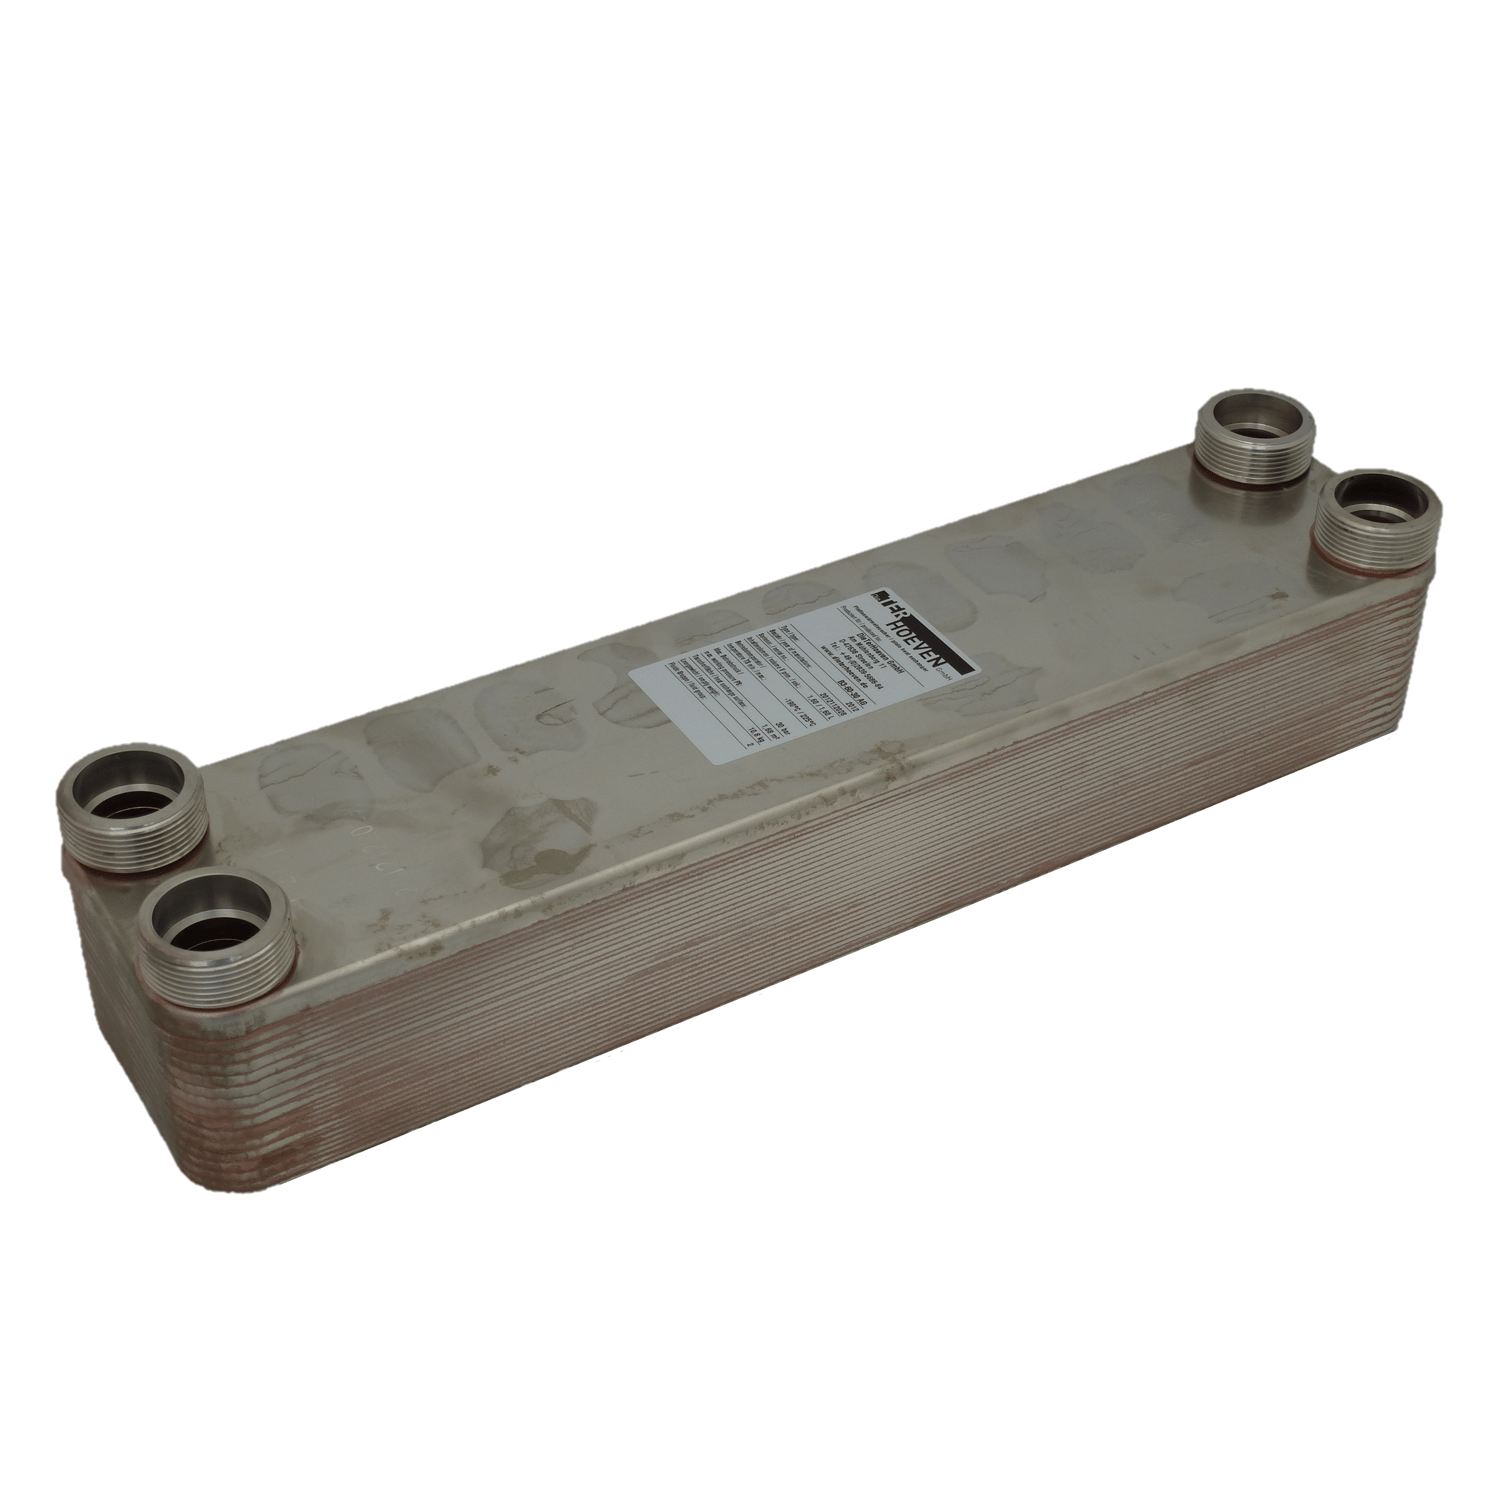 DTH-C43H-30 4x1 "ET copper-brazed plate heat exchanger. Version acc. to data sheet/dimension sheet (B1, B2)